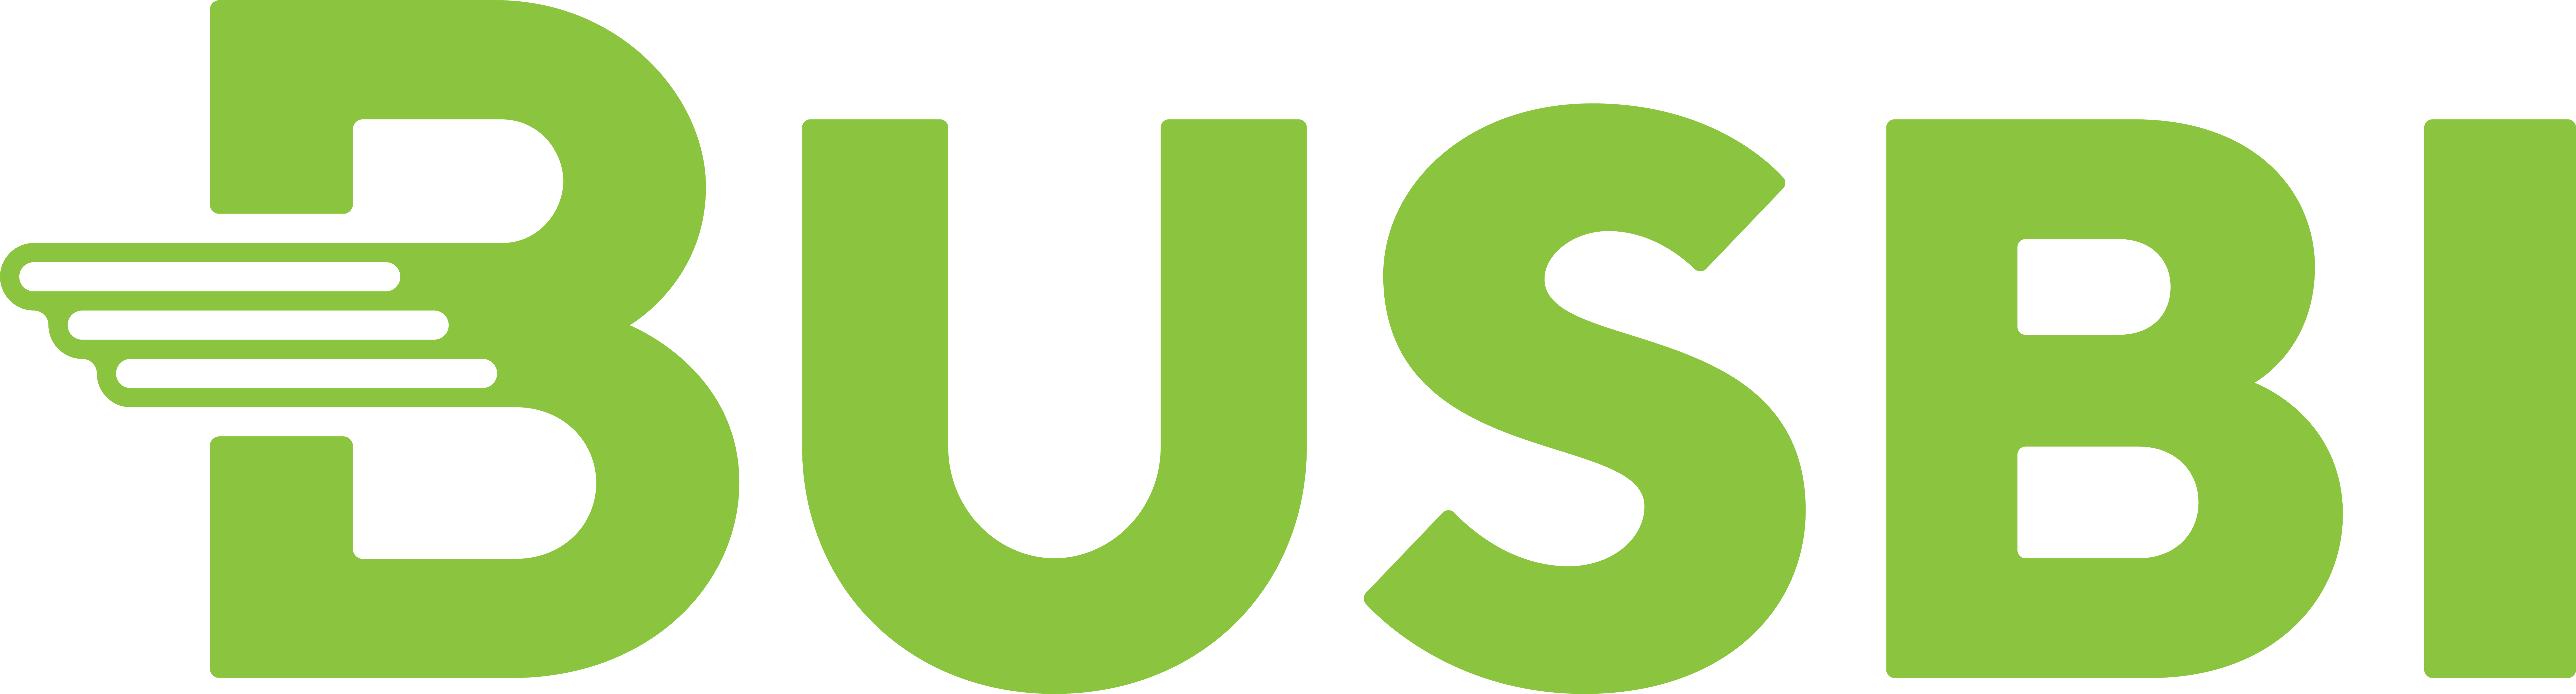 busbi-logo